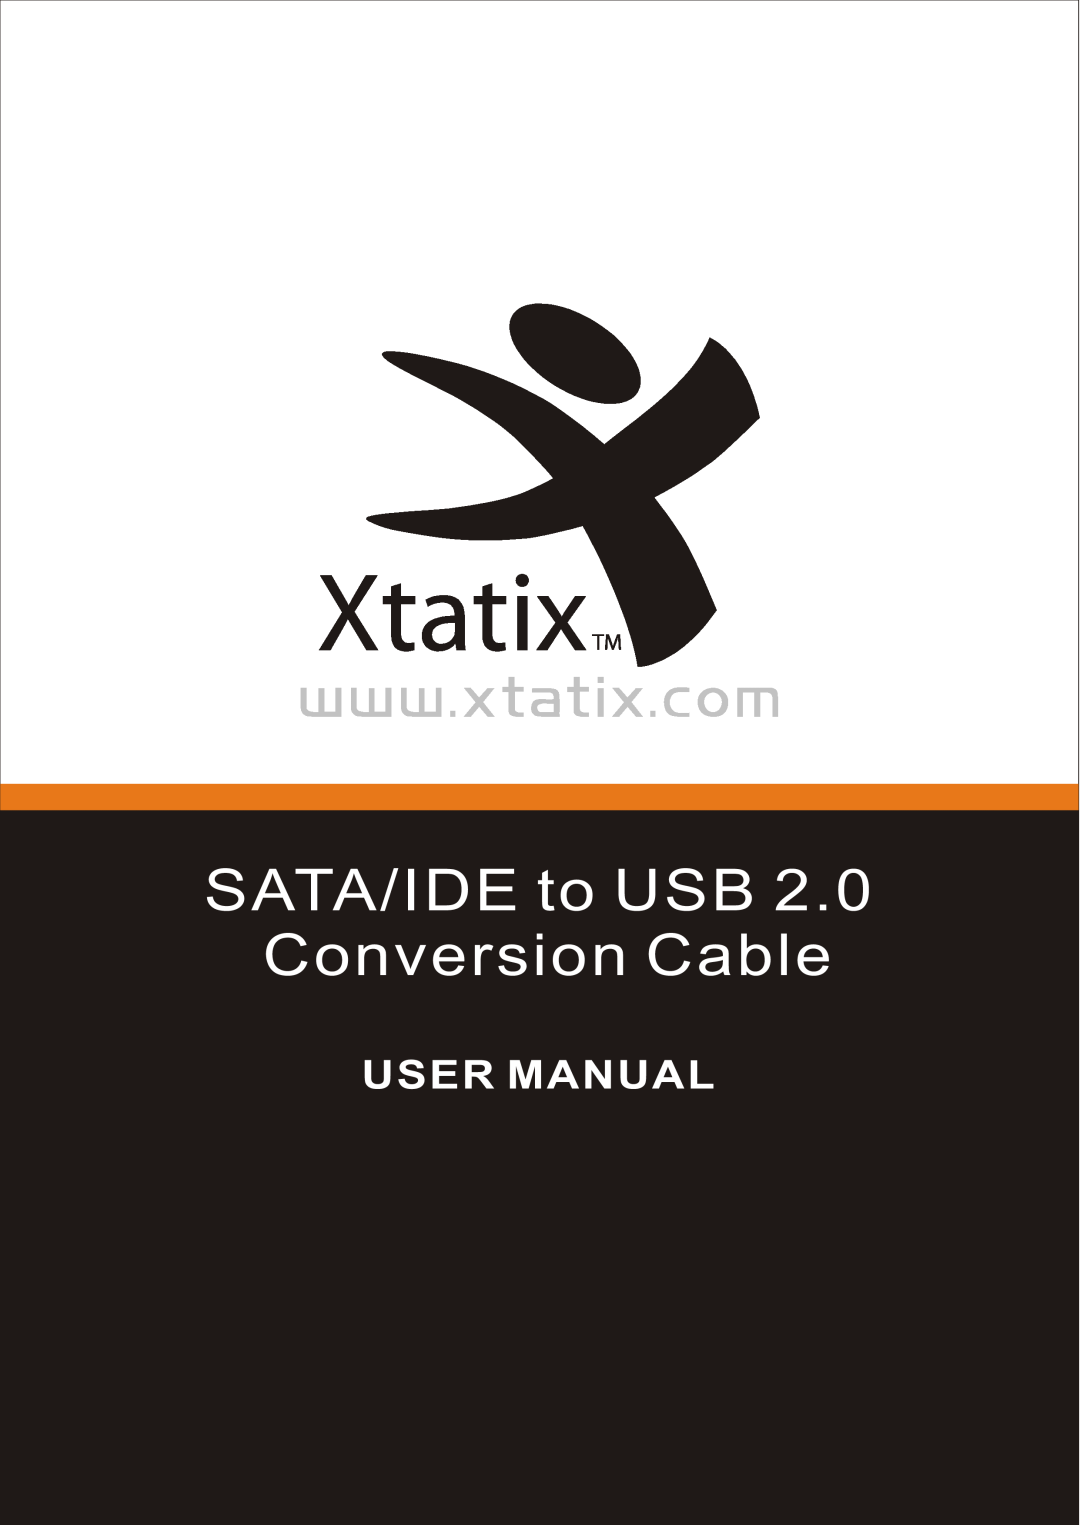 Xtatix XCA-PDSI user manual SATA/IDE to USB, Conversion Cable, User Manual 